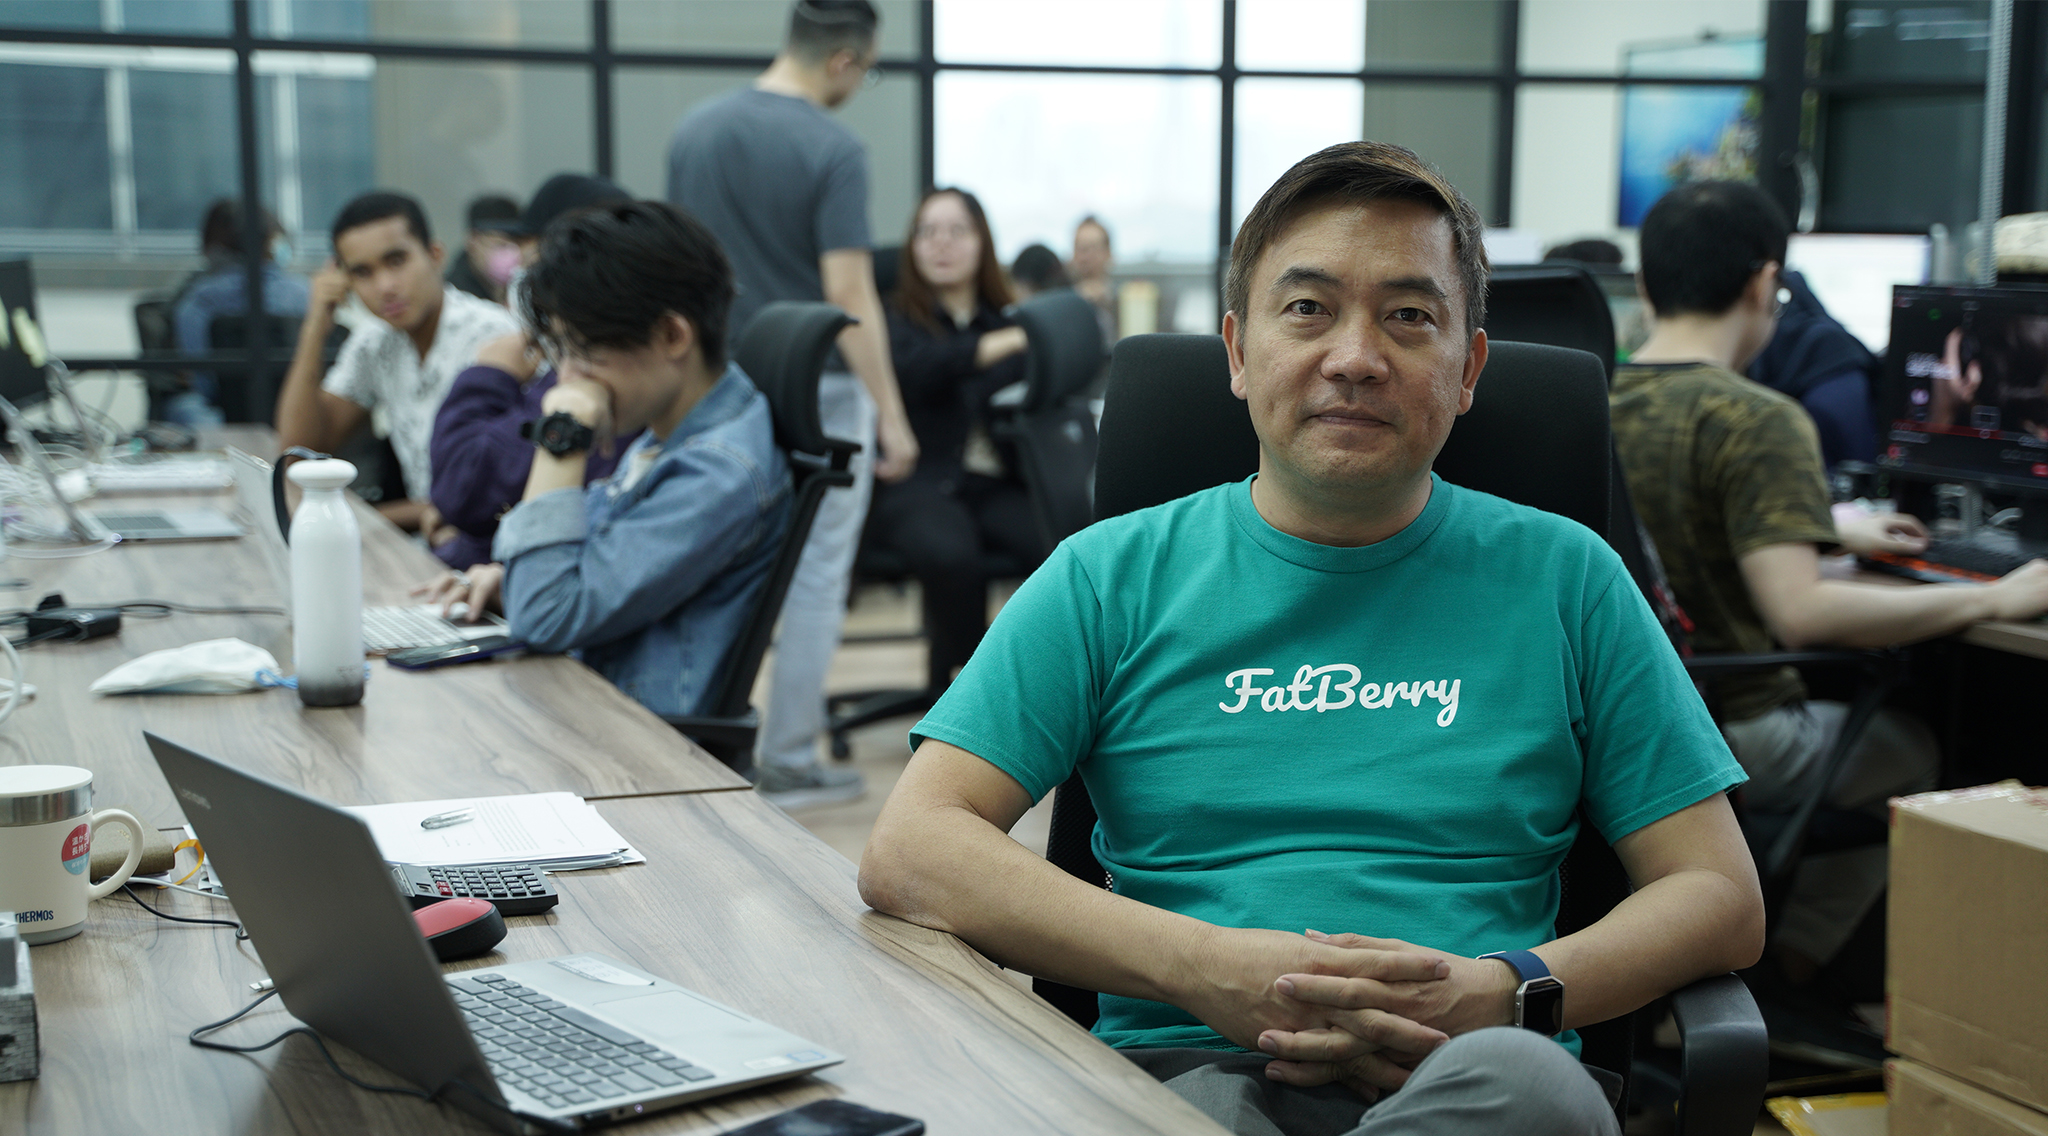 Insurtech Platform Fatberry Raises RM 2.5 Million in Pre-Series A Funding Round